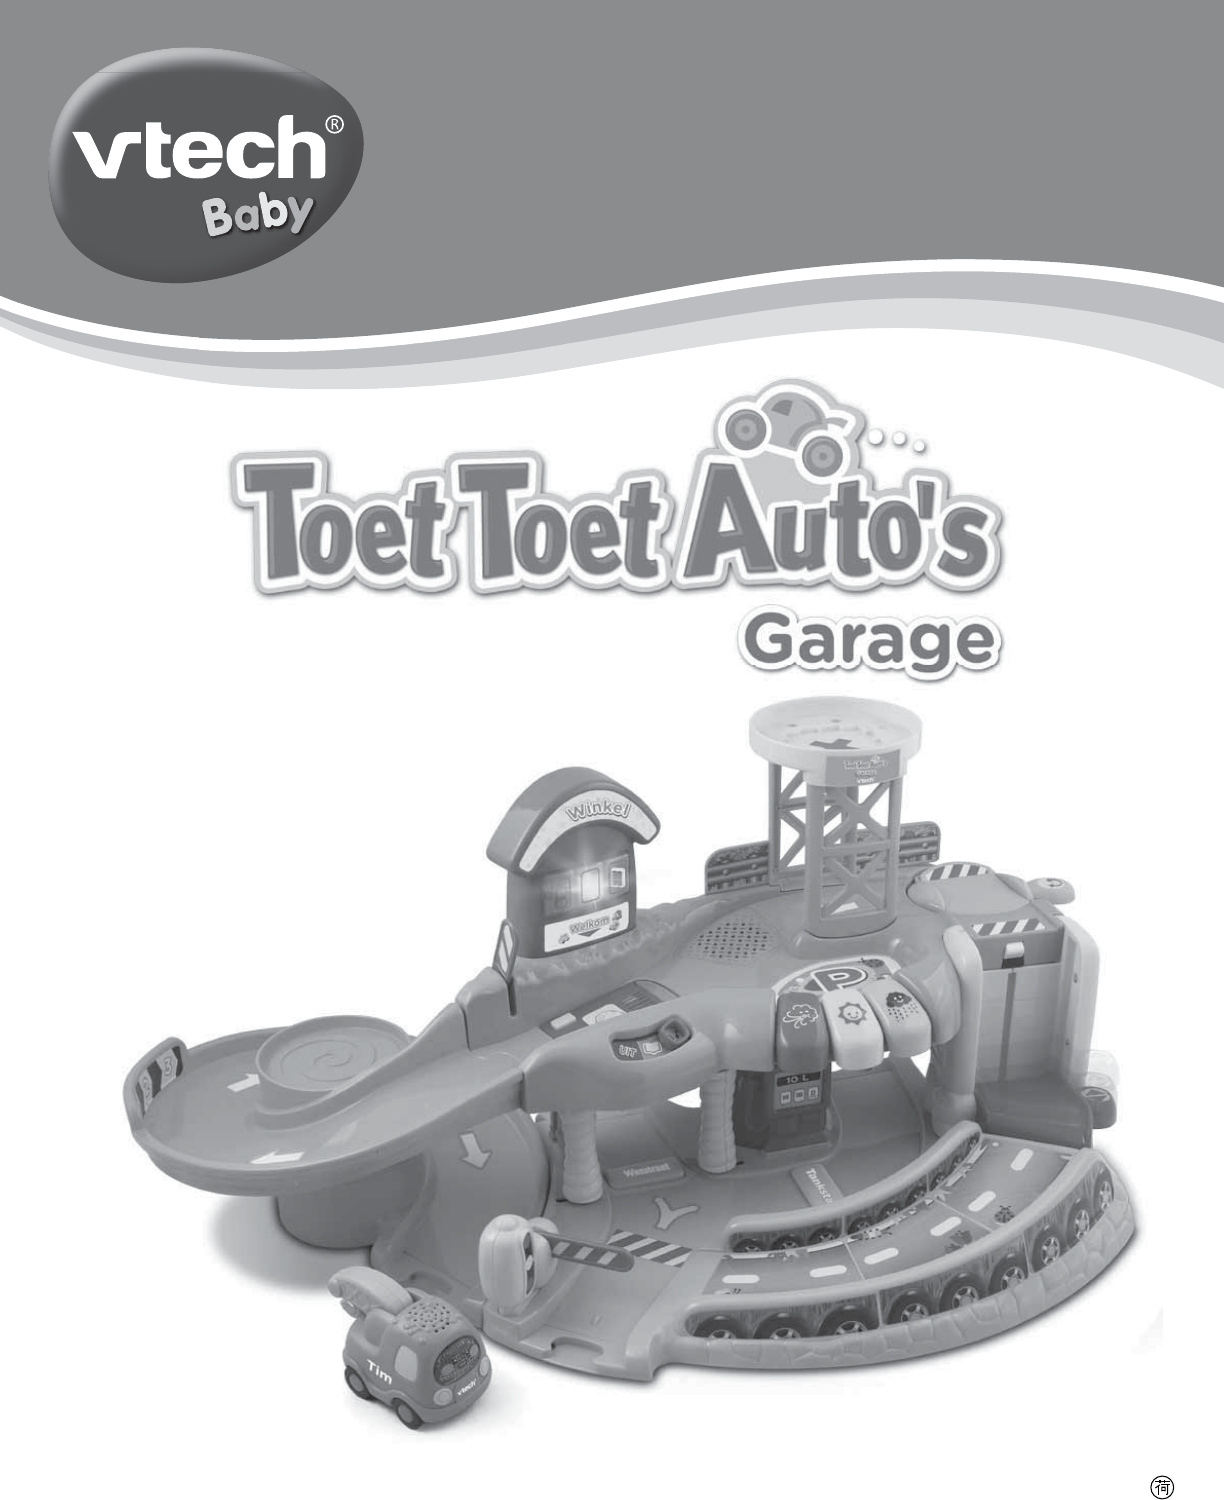 Desillusie inkt Dag Manual VTech Toet Toet Auto s Garage (page 1 of 16) (Dutch)